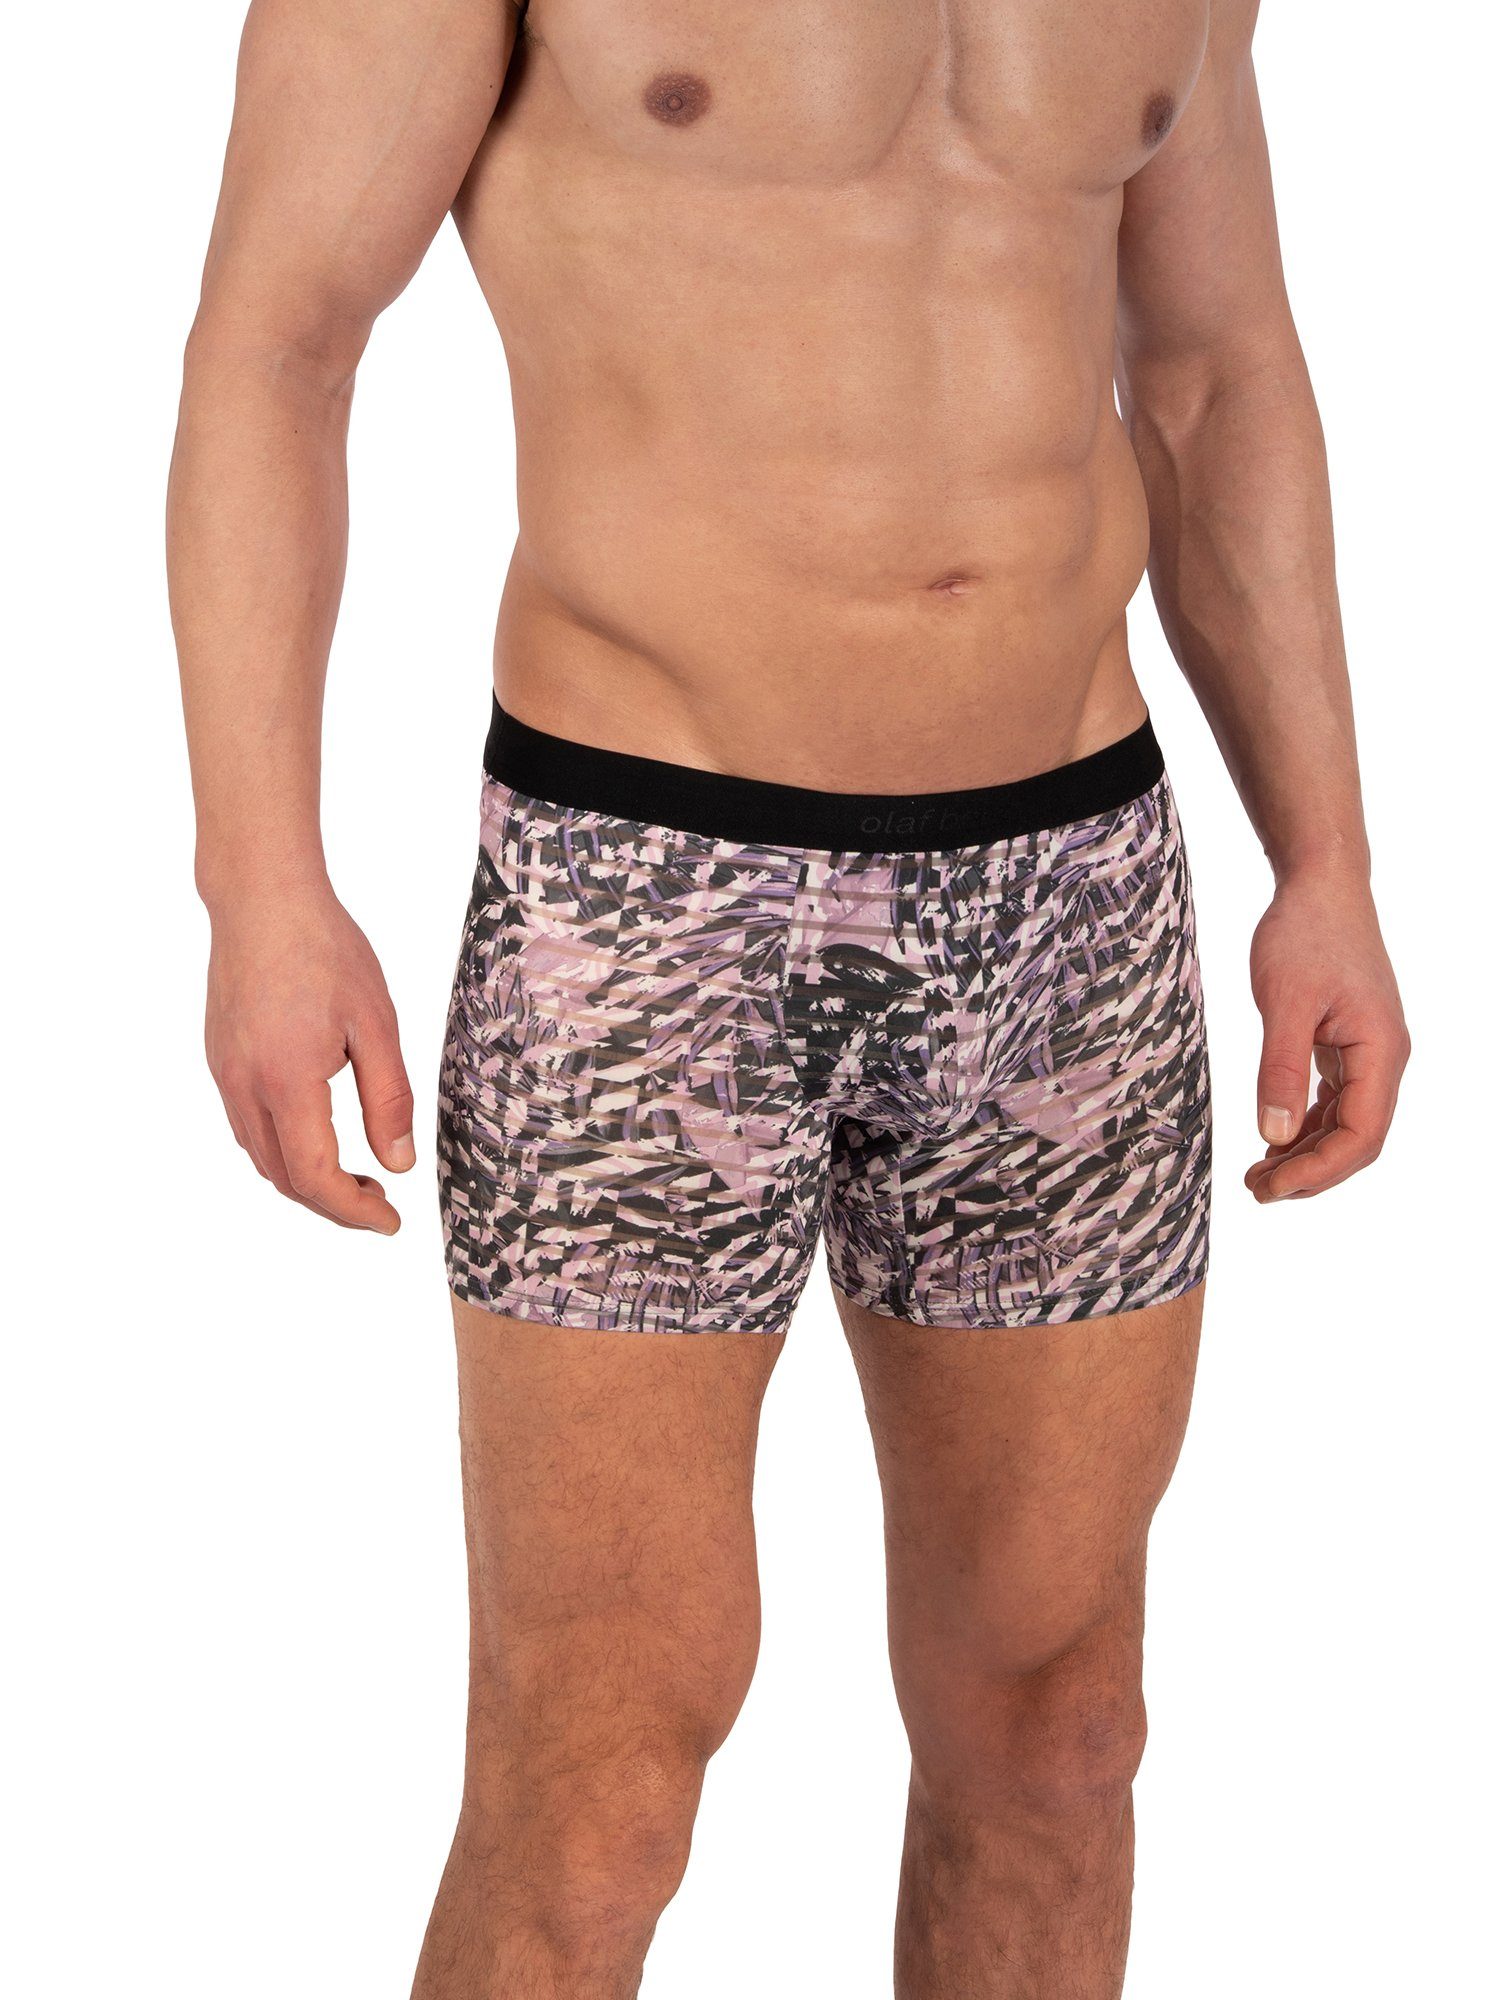 Olaf Benz Retro Boxer Retro-Boxer violet retroshorts style Boxerpants RED2333 boxershorts